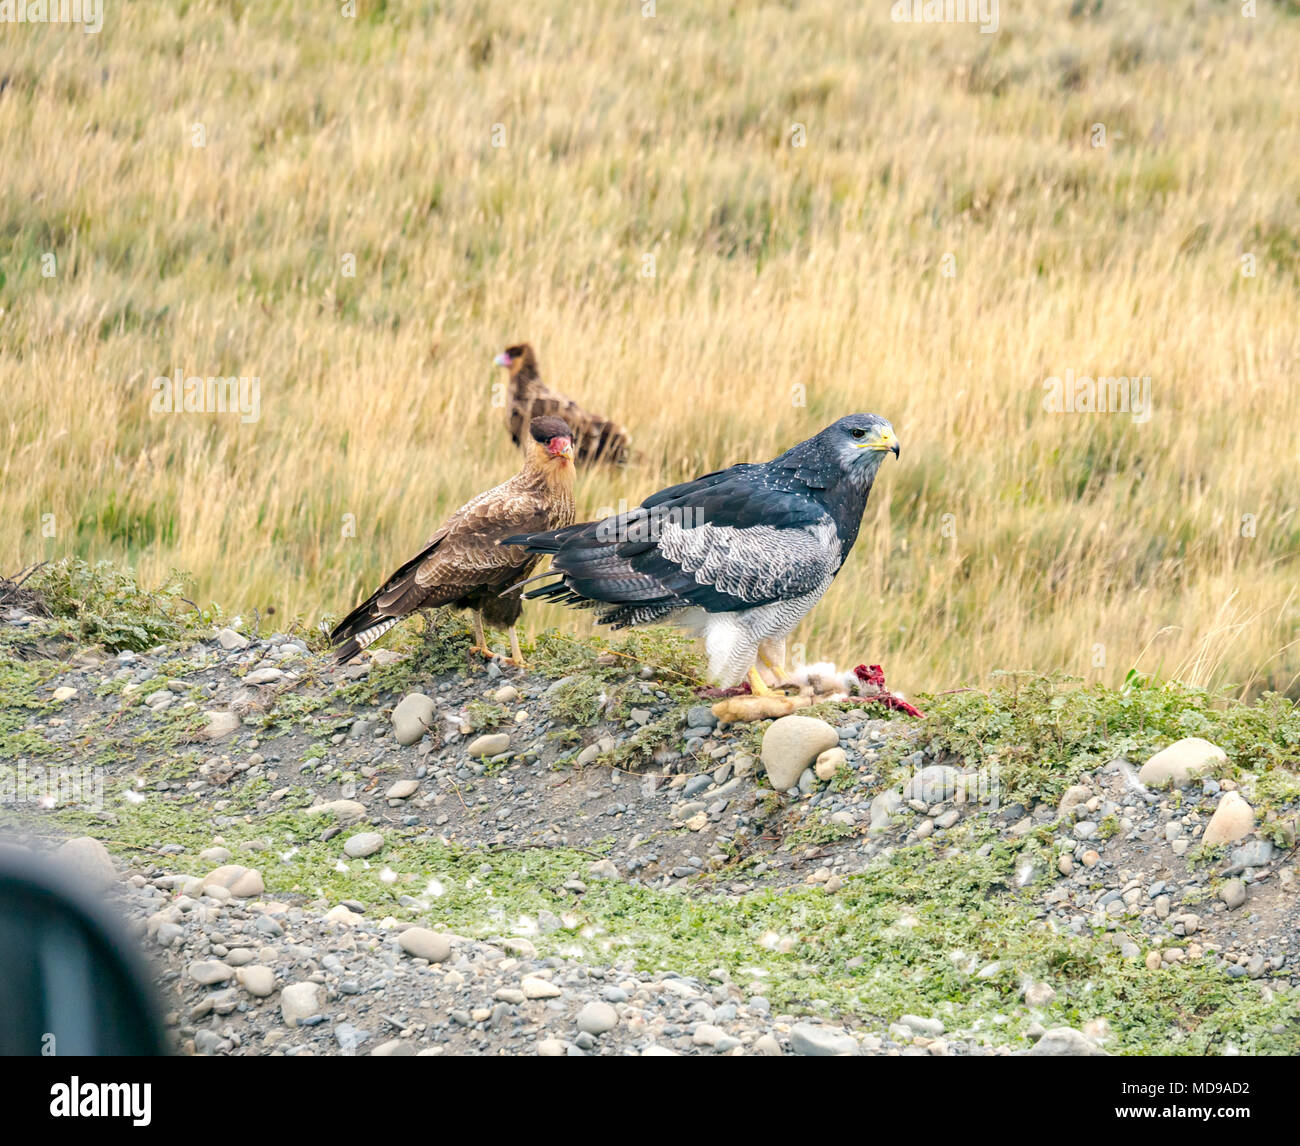 Schwarz chested Bussard eagle $ Southern crested Karakaras mit Roadkill, Torres del Paine Nationalpark, Patagonien, Chile, Südamerika Stockfoto